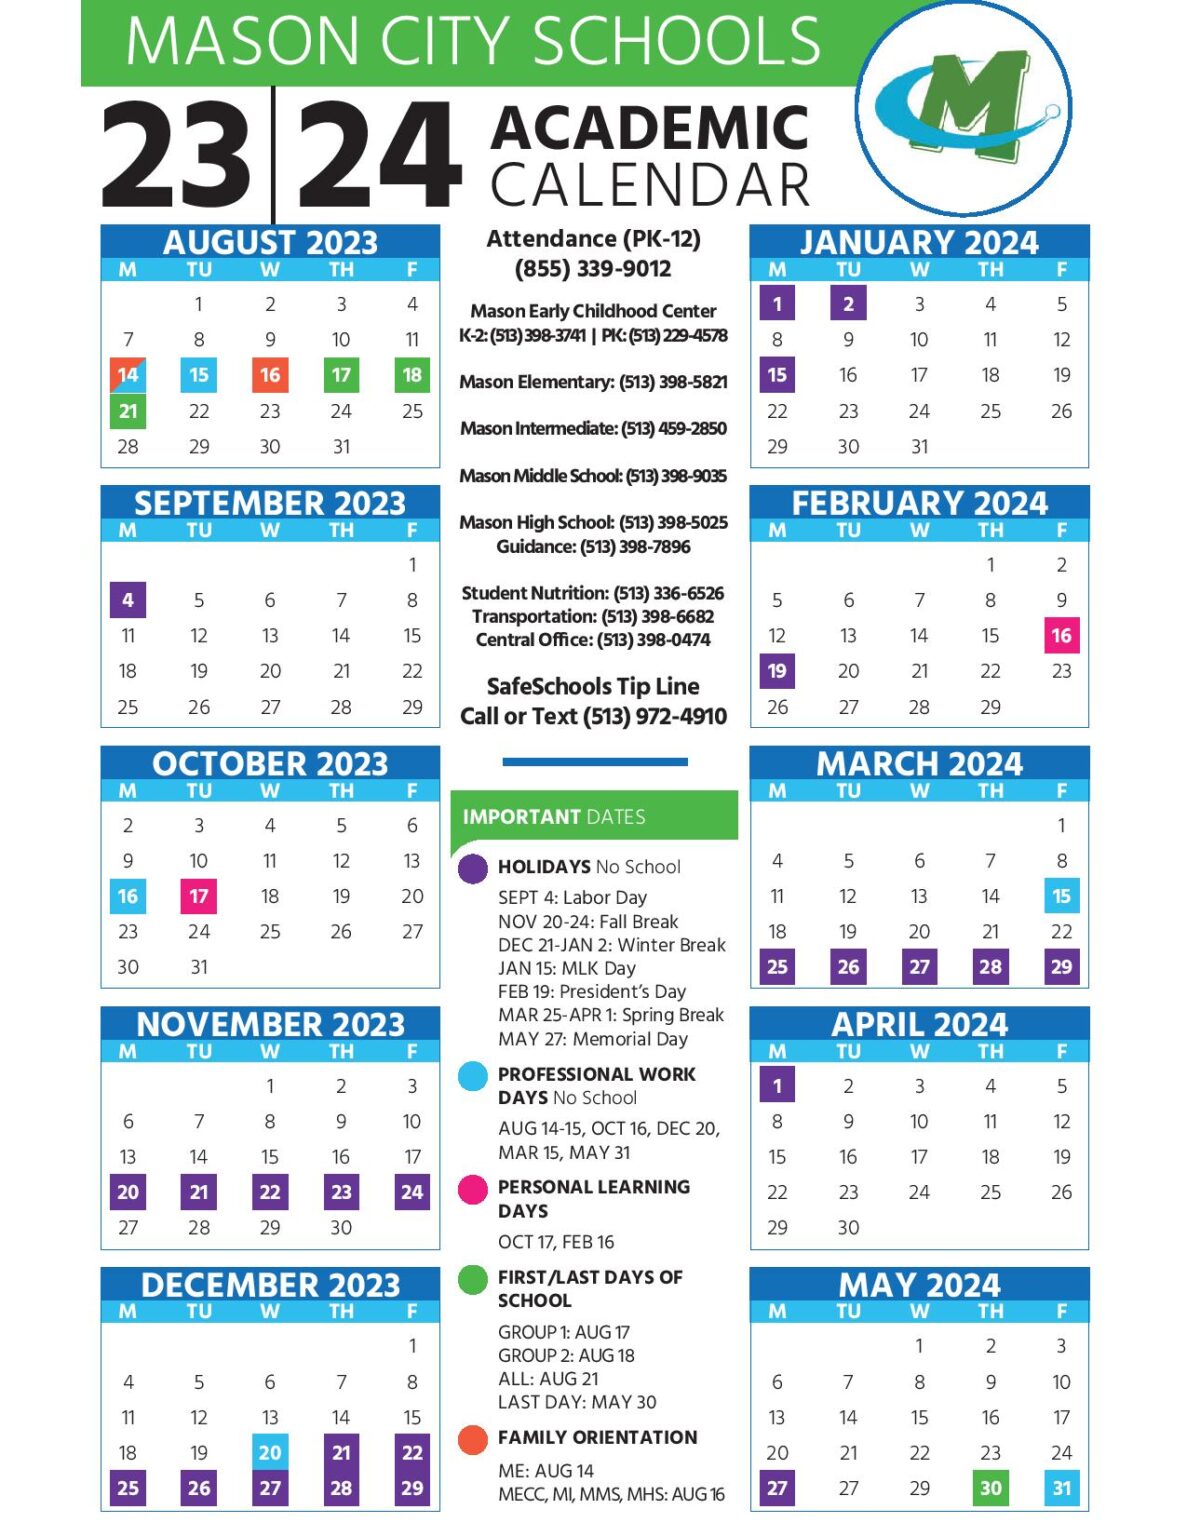 Mason City Schools Calendar 20232024 in PDF School Calendar Info